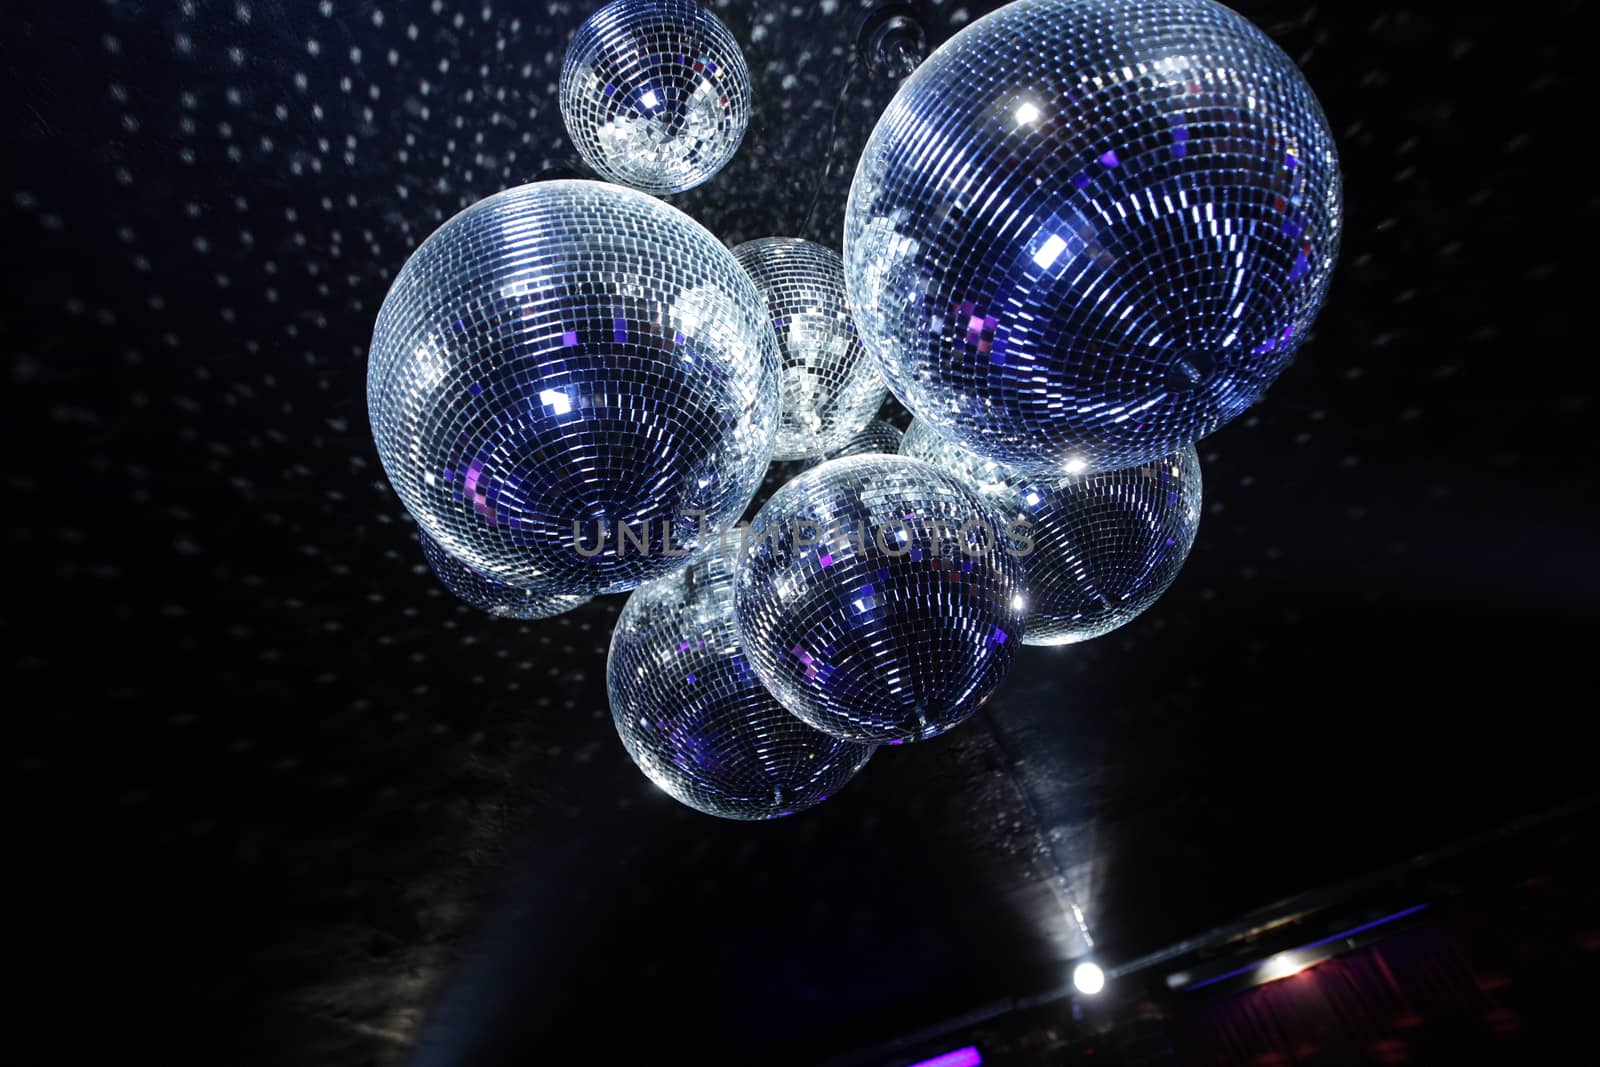 Disco balls in dark  by gorov108